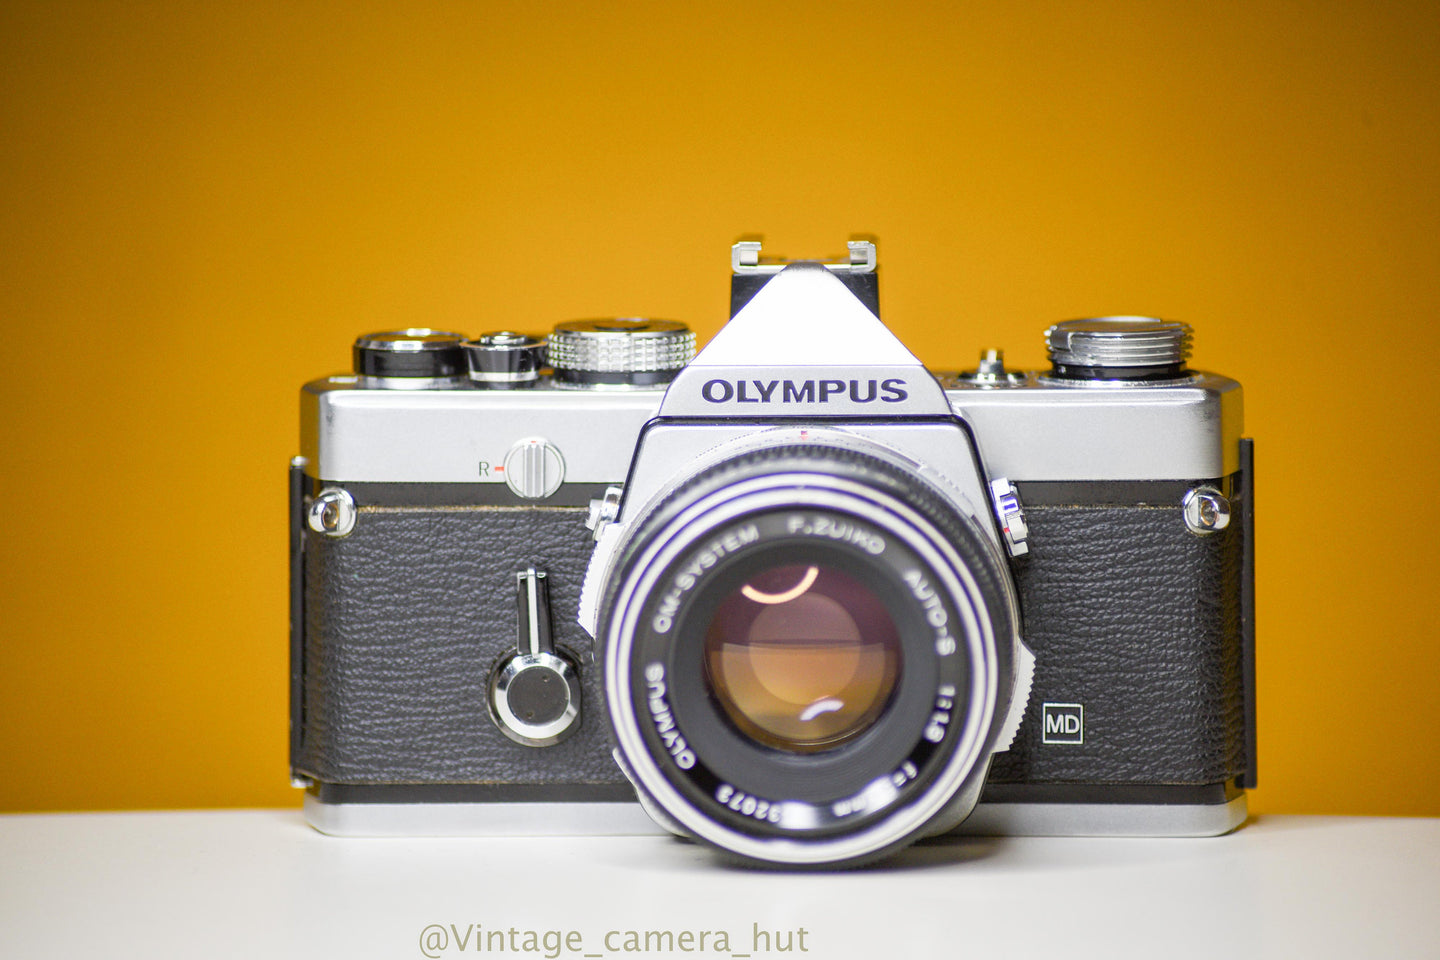 Olympus OM1 MD 35mm Film Camera with Zuiko 50mm f/1.8 Prime Lens